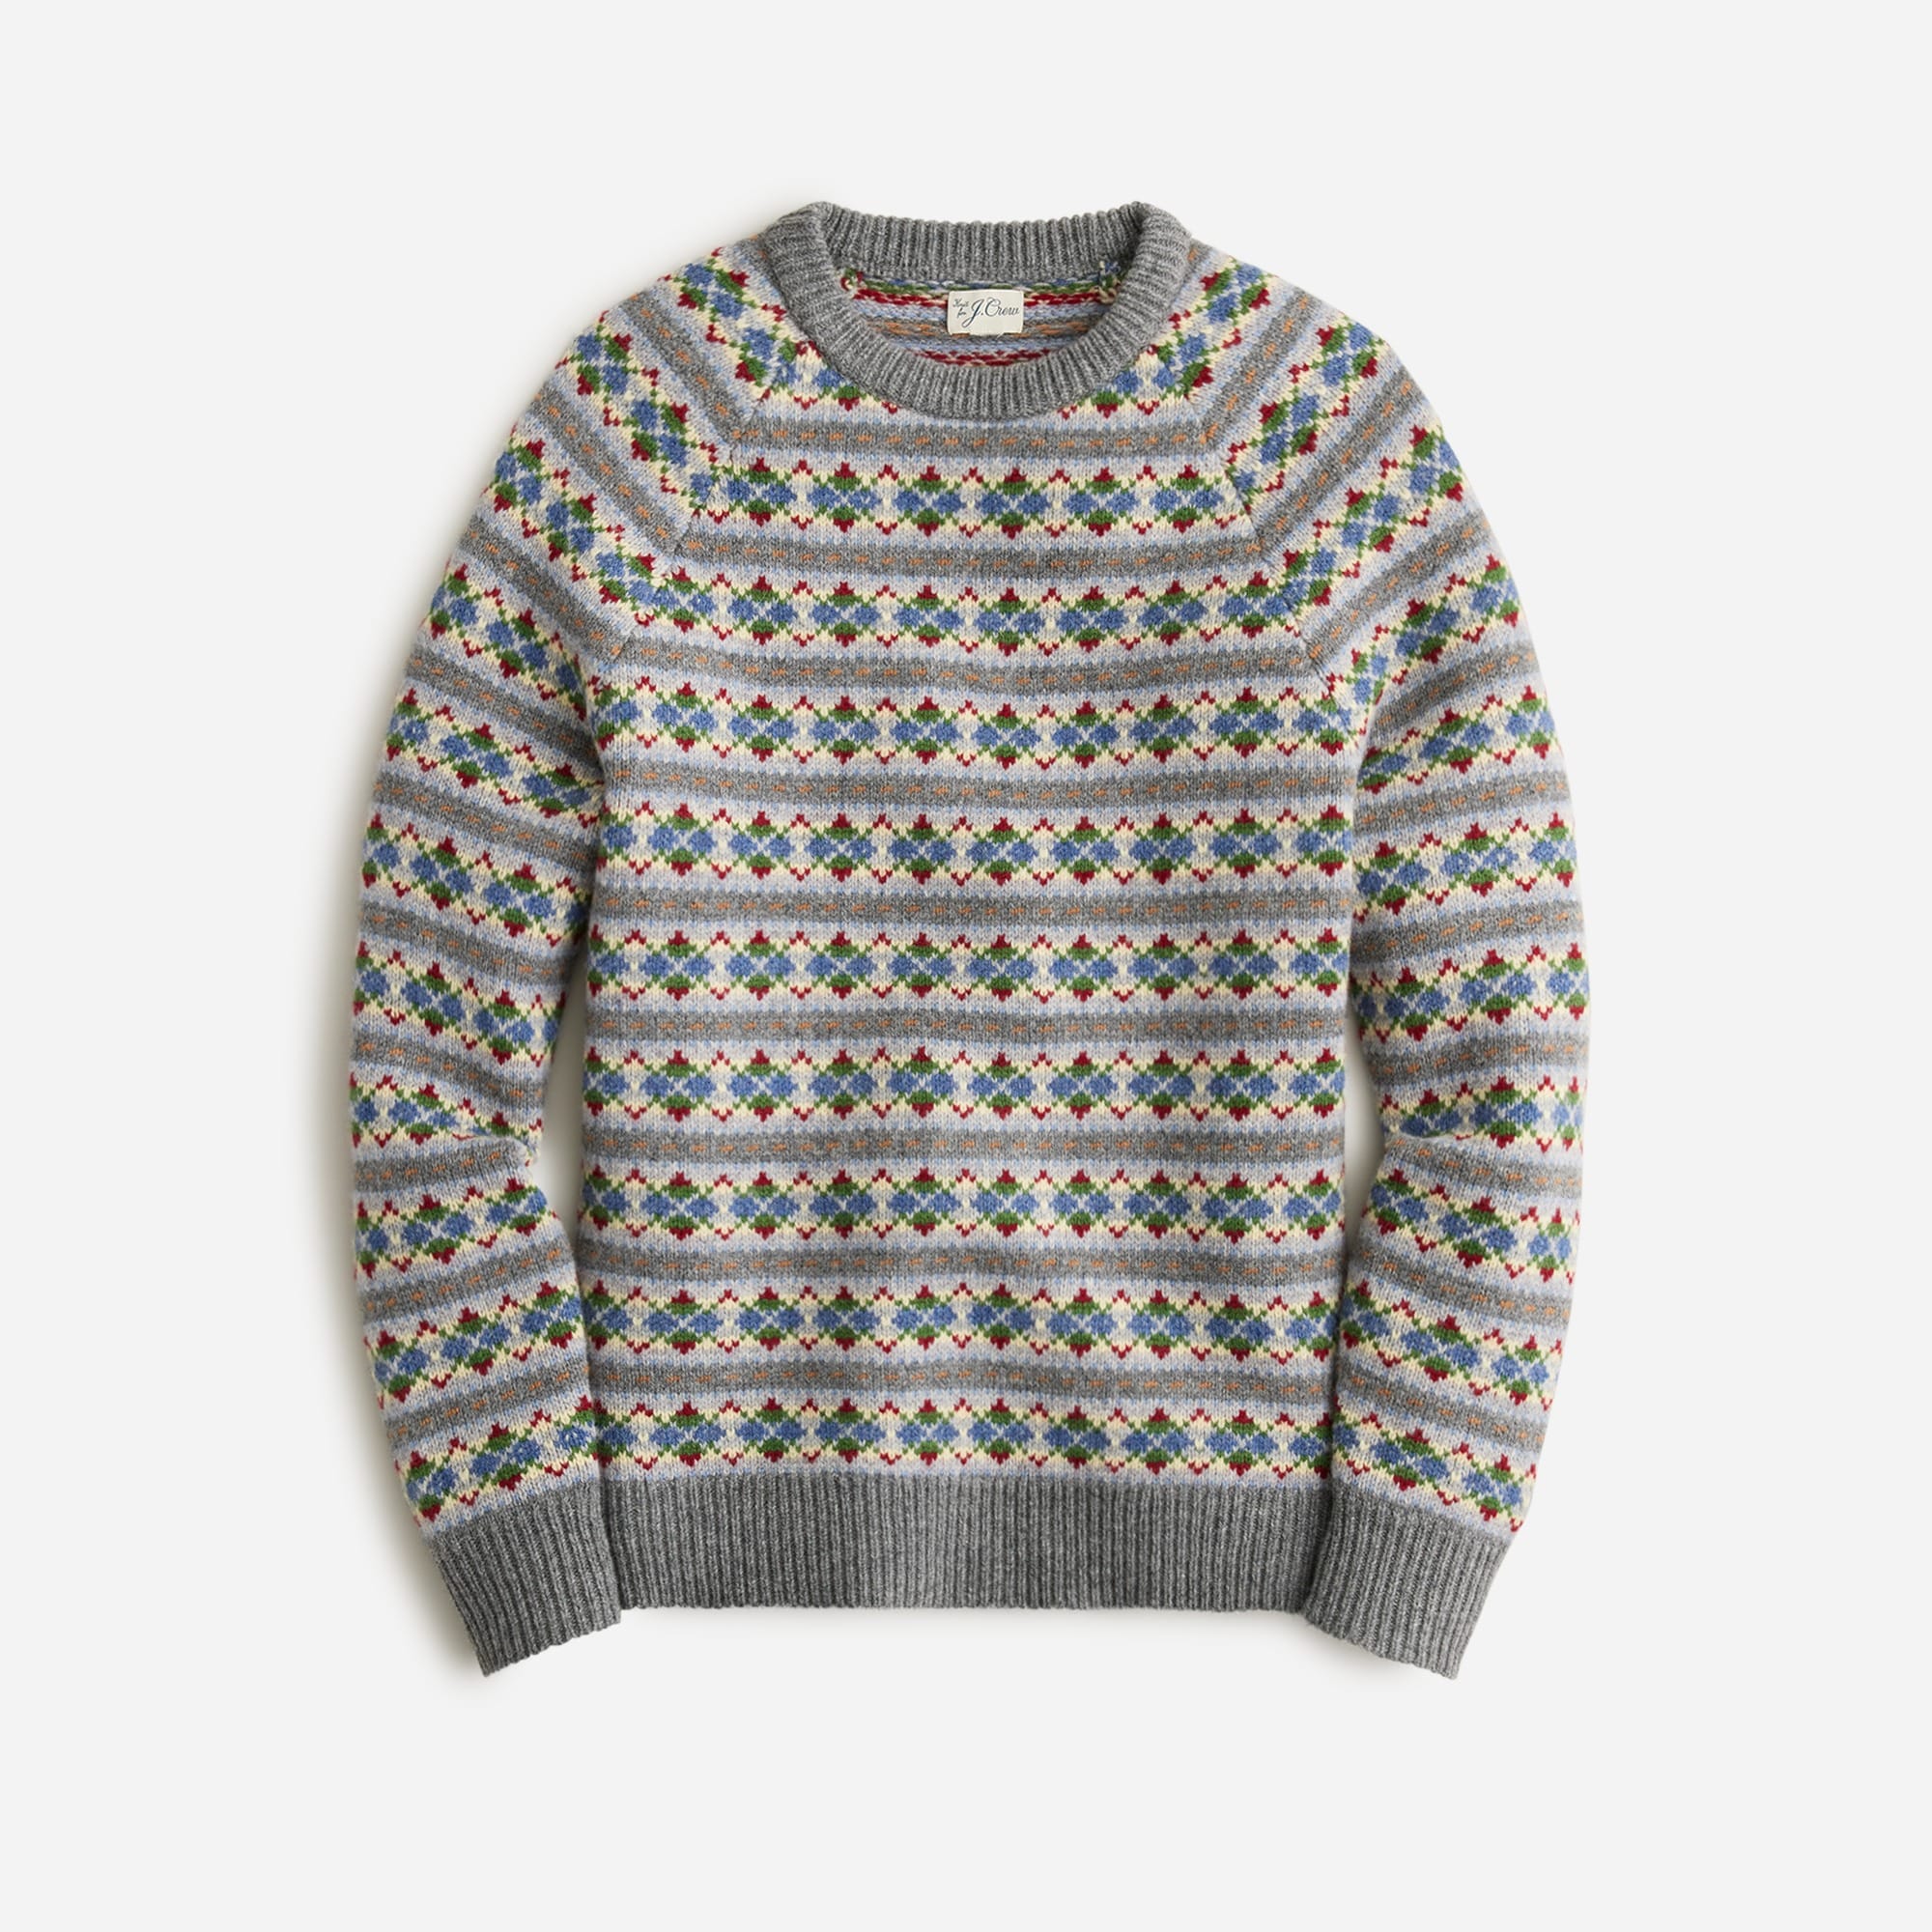  Lambswool Fair Isle sweater with argyle